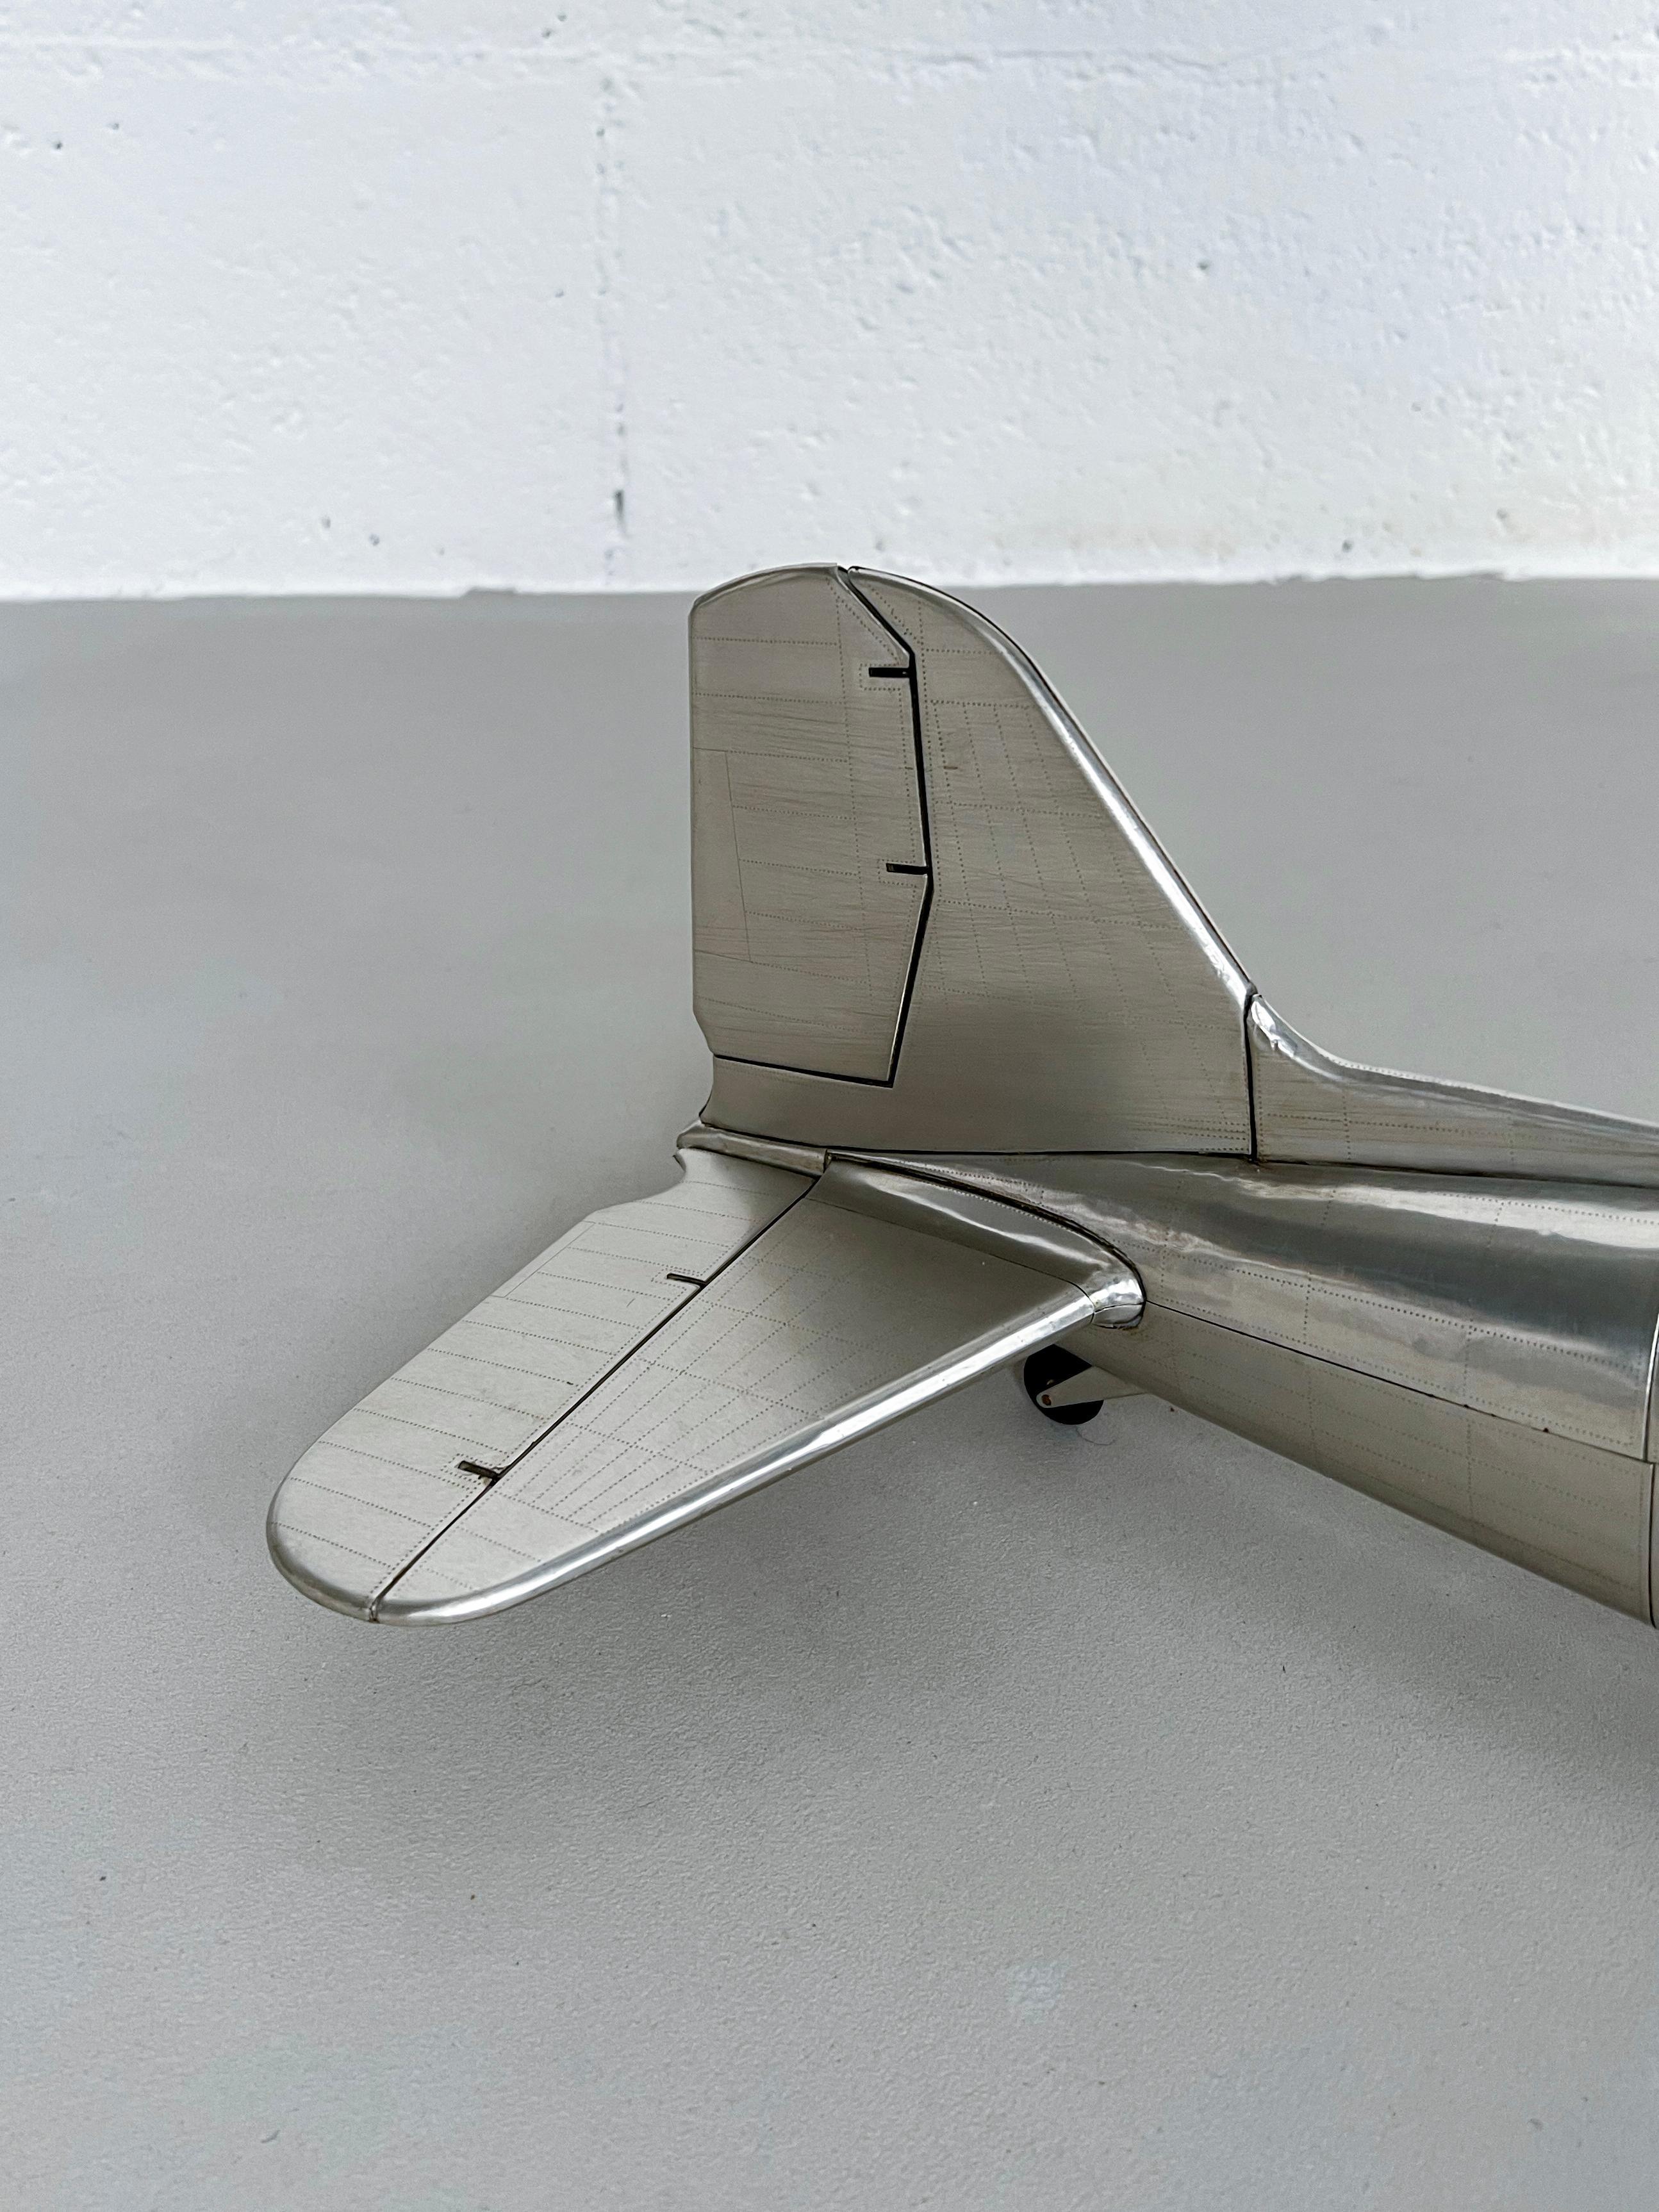 Douglas Dc-3 Aircraft Model, Big Size, Richly Detailed, Streamlined Metal Plane 2